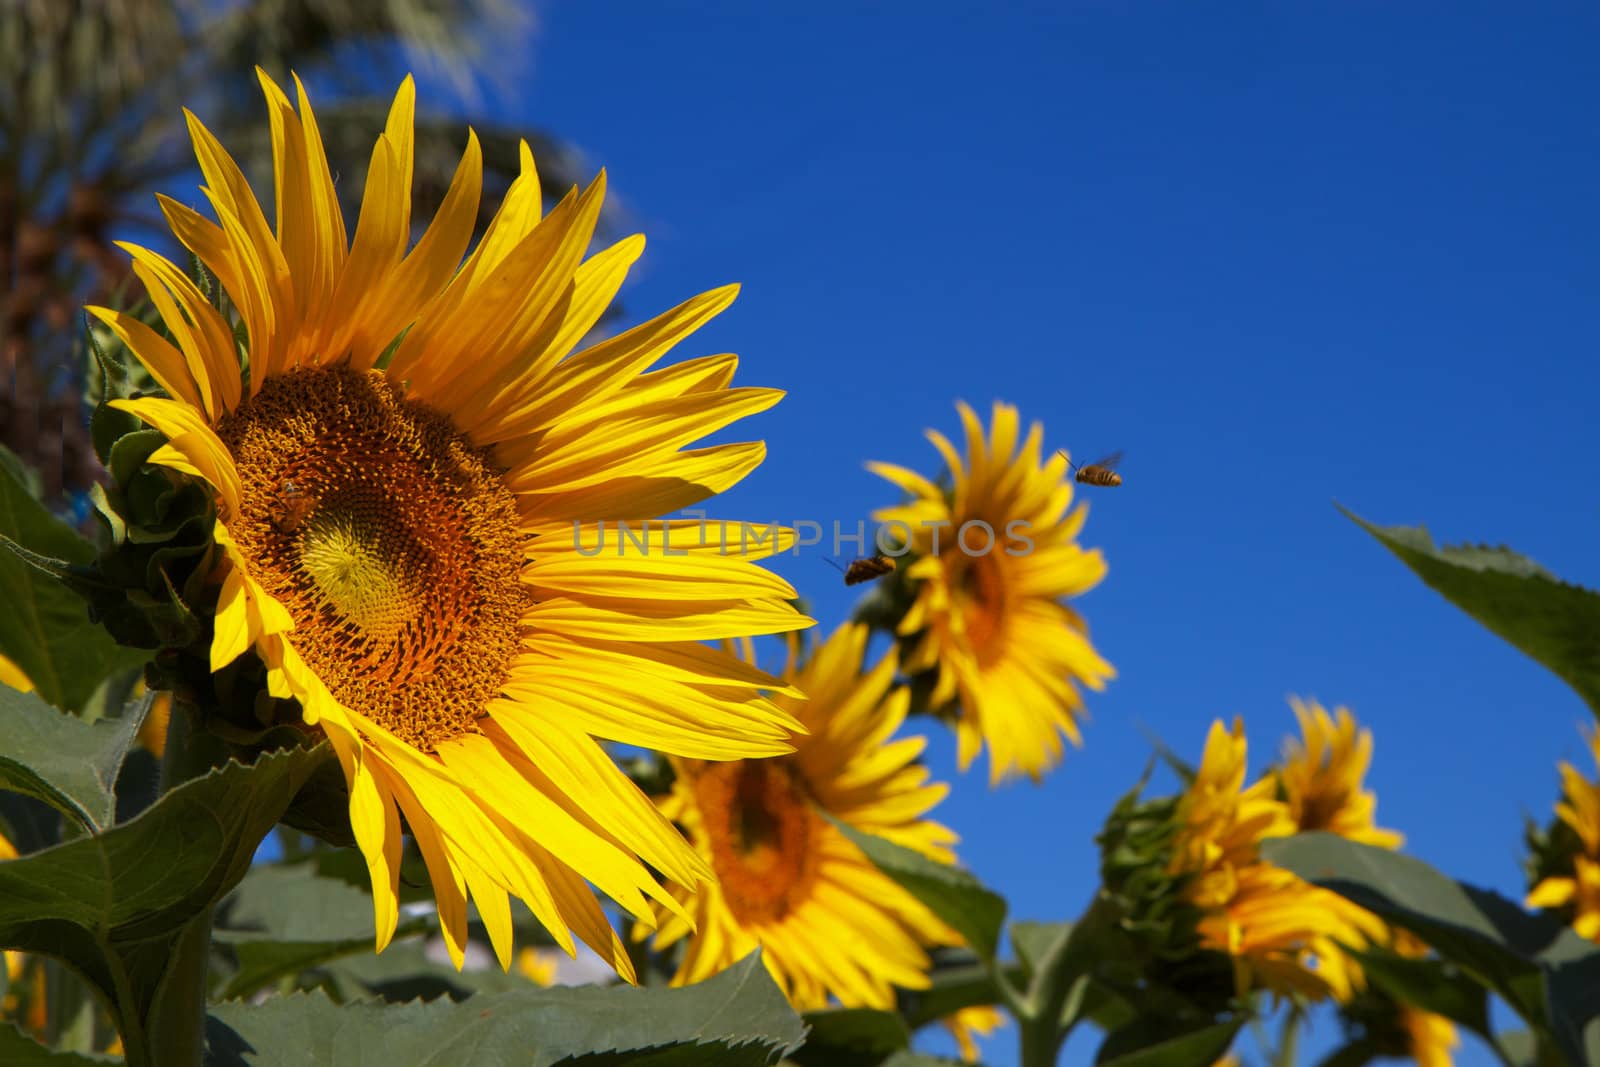 Sun Flowers blue Sky Bees by bobkeenan